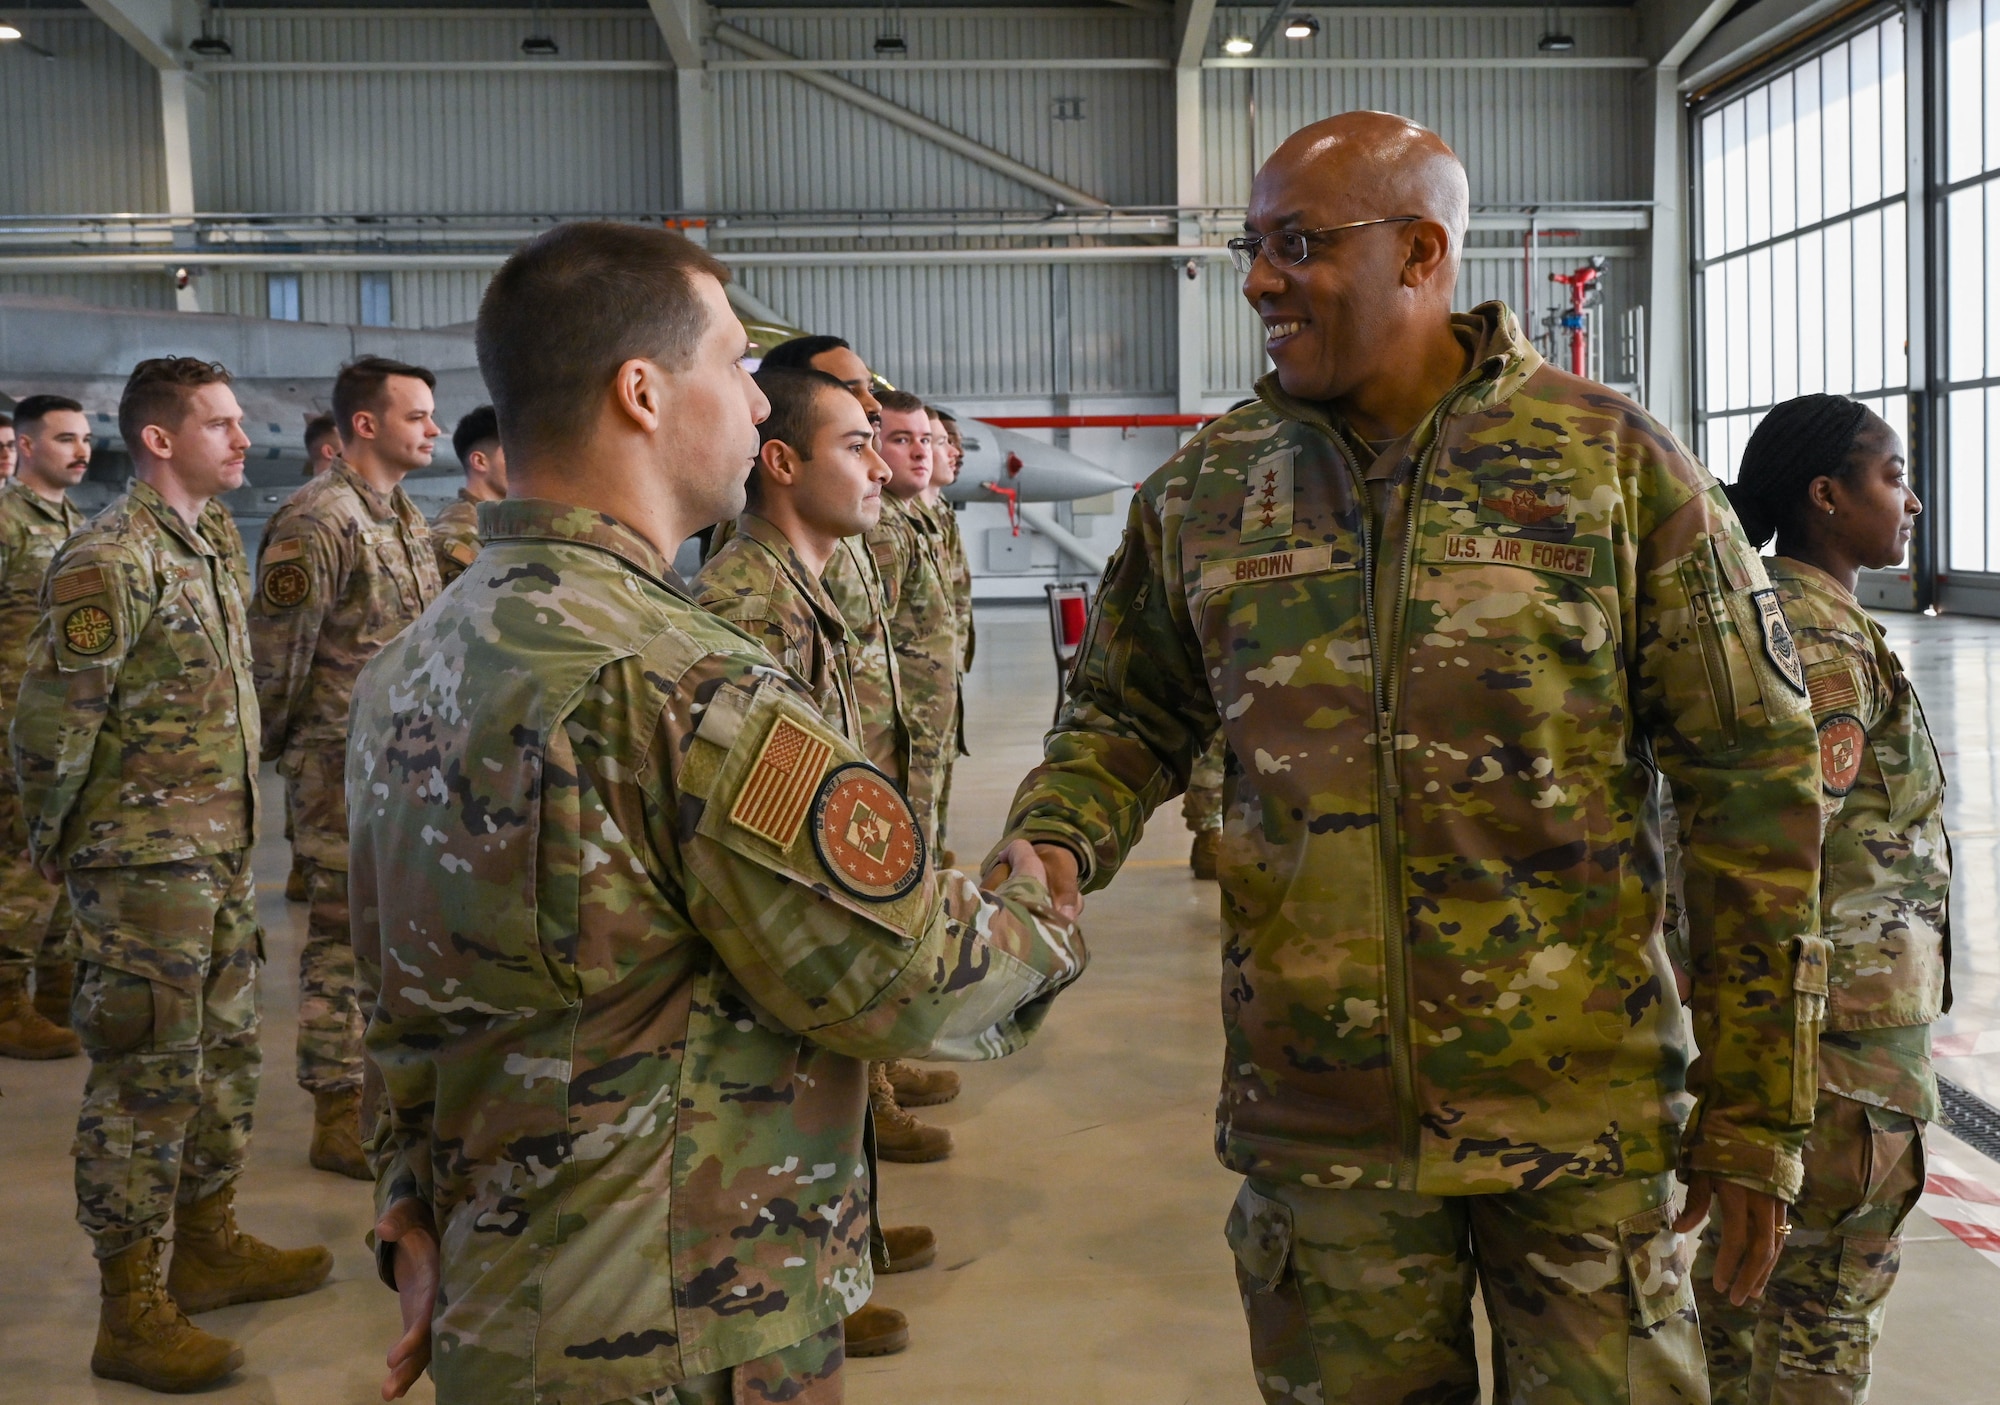 Two military members shake hands